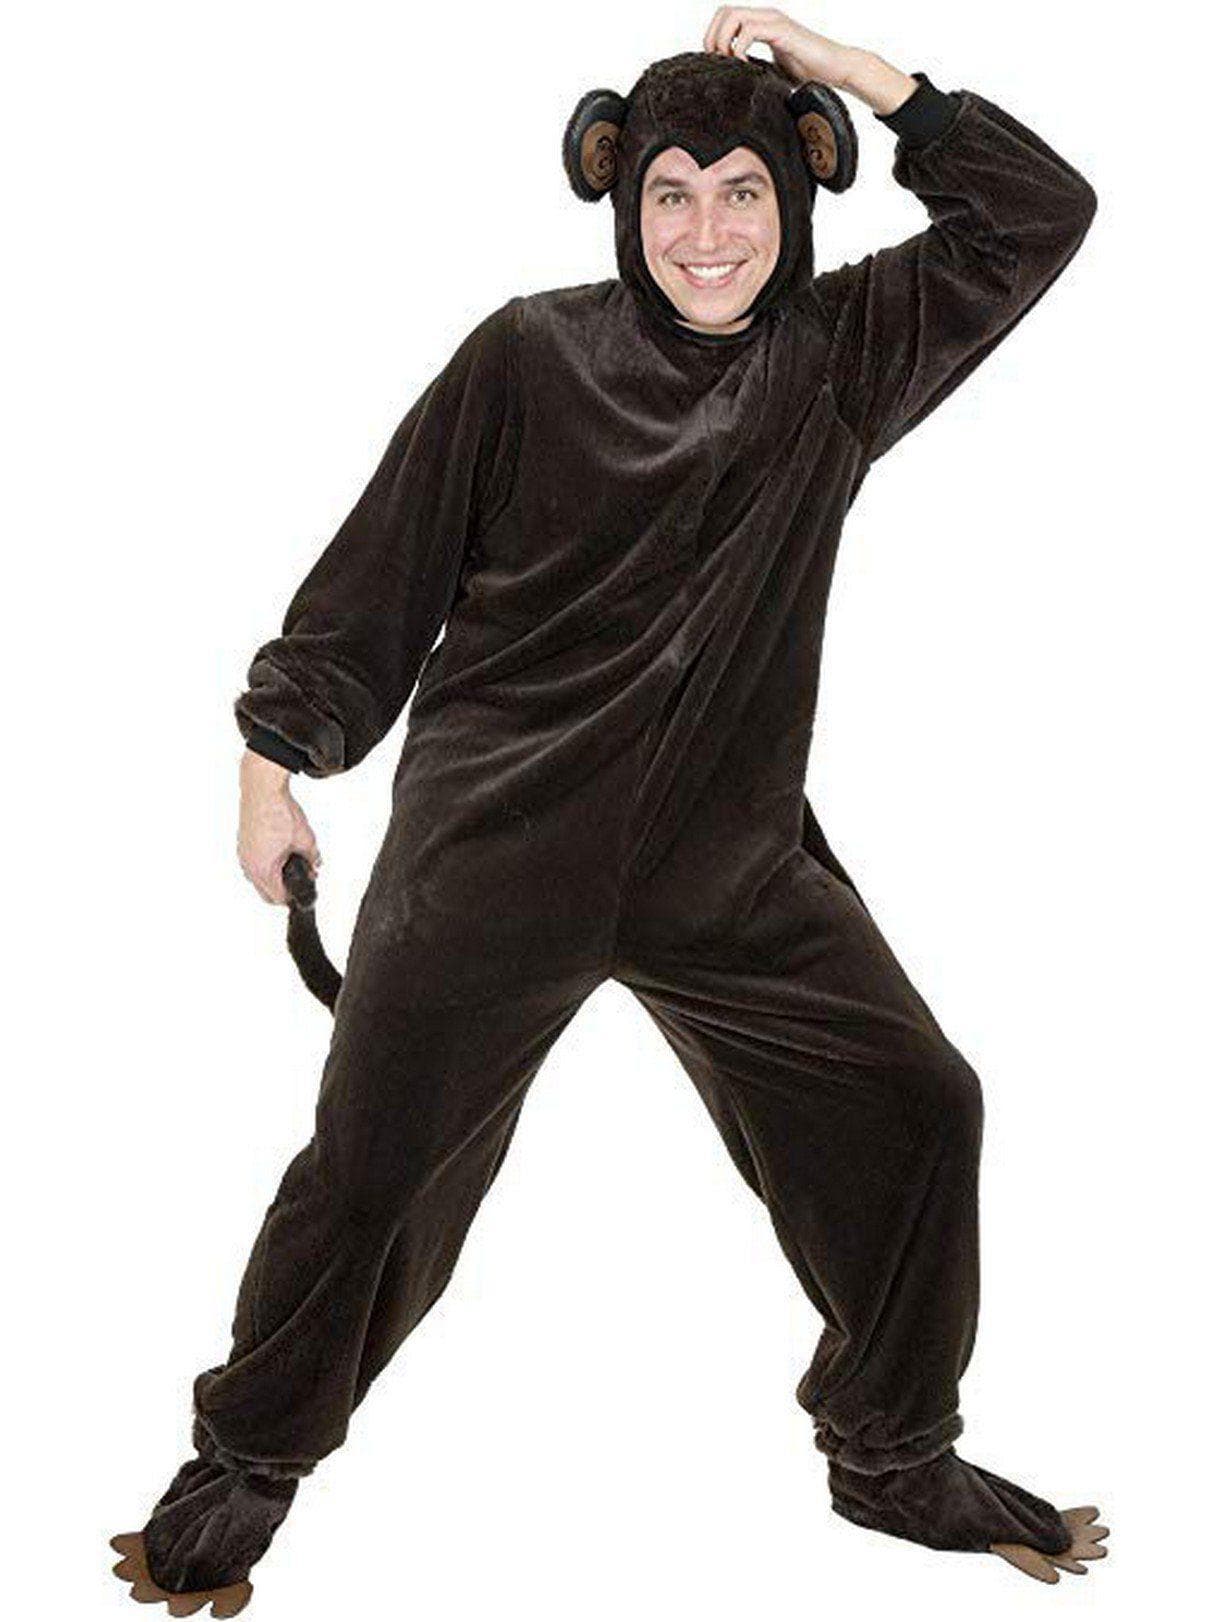 Adult Monkey Micro Fiber Plus Size Costume - costumes.com